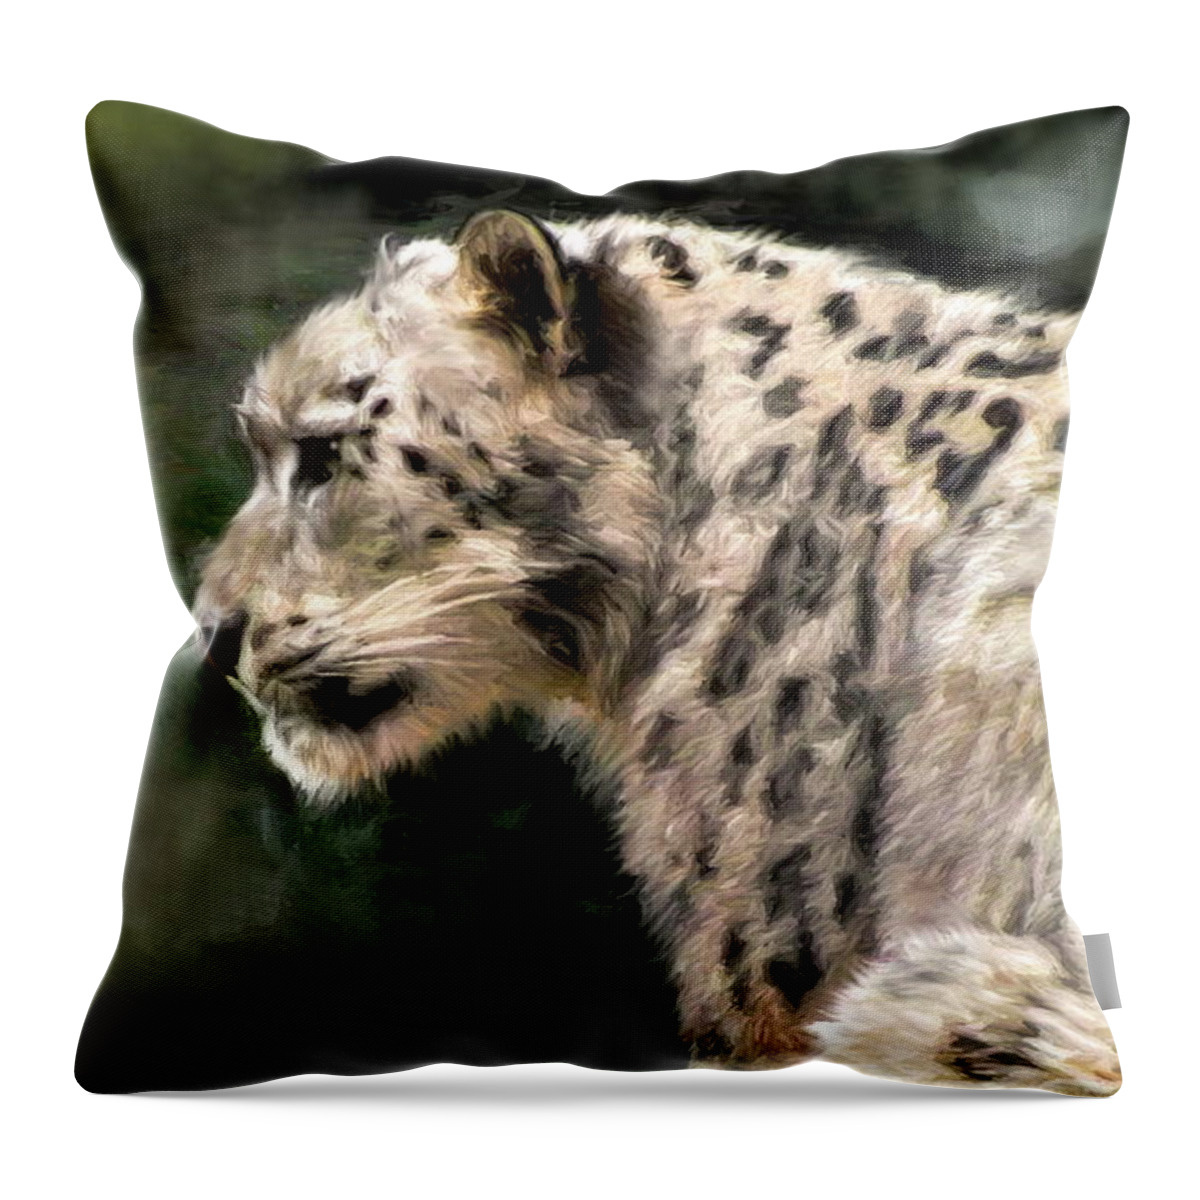 Snow Leopard Throw Pillow featuring the digital art Snow Leopard by Kaylee Mason